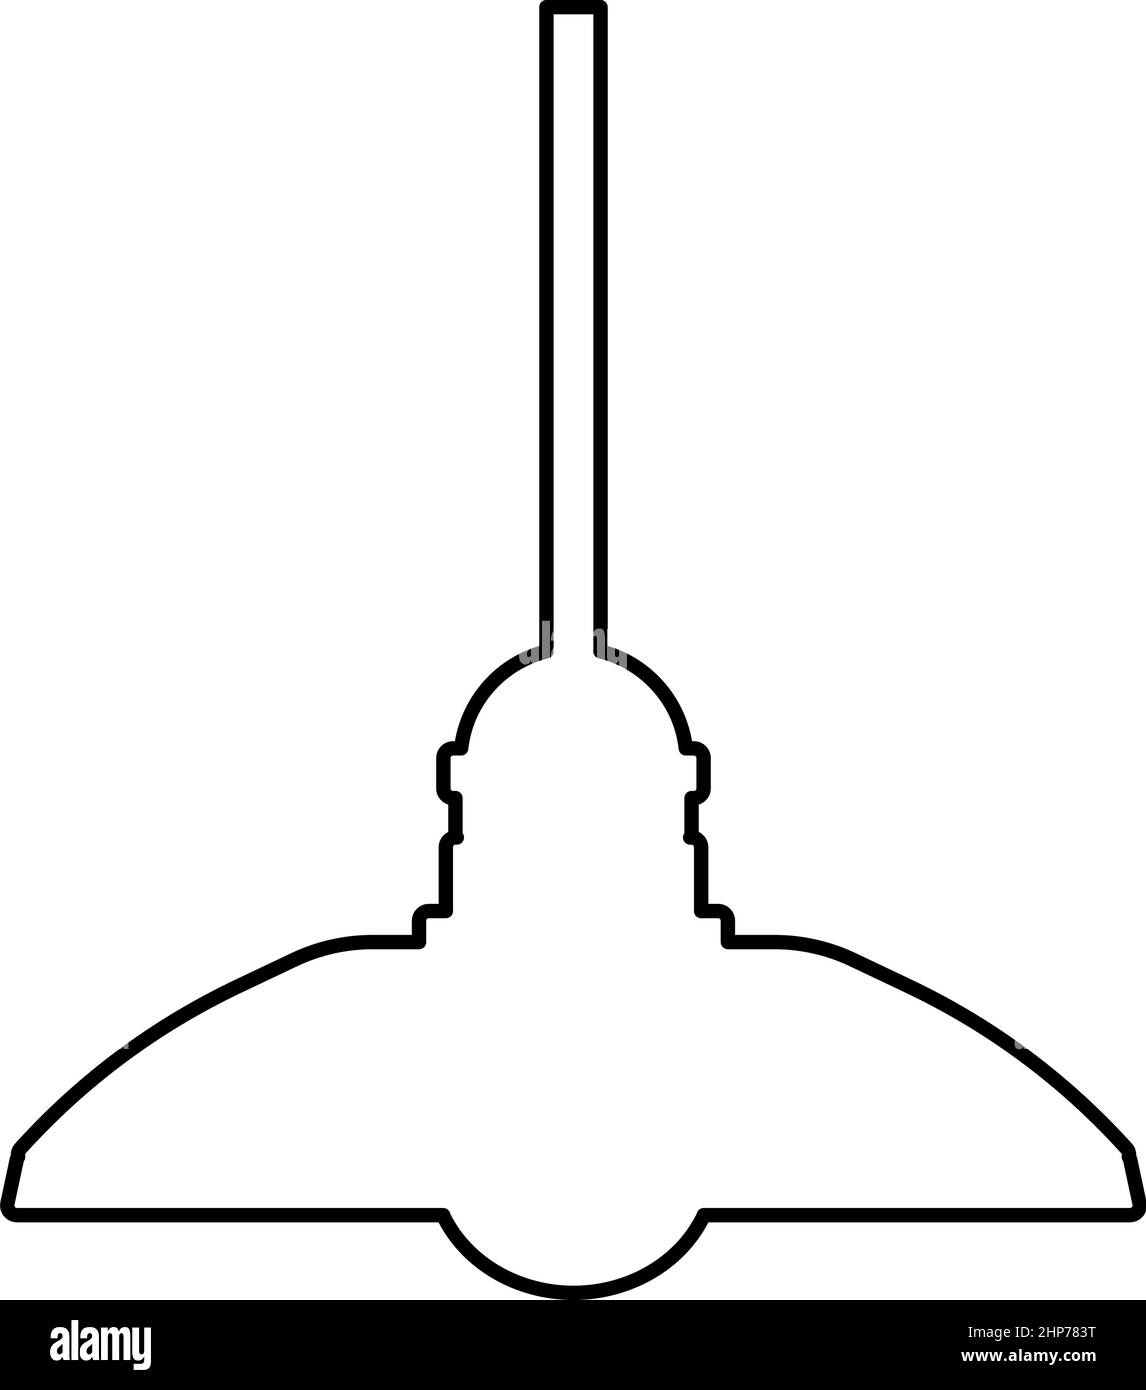 Kronleuchter Plafond Hängelampe Kontur Umriss Symbol schwarze Farbe Vektor Illustration flachen Stil Bild Stock Vektor